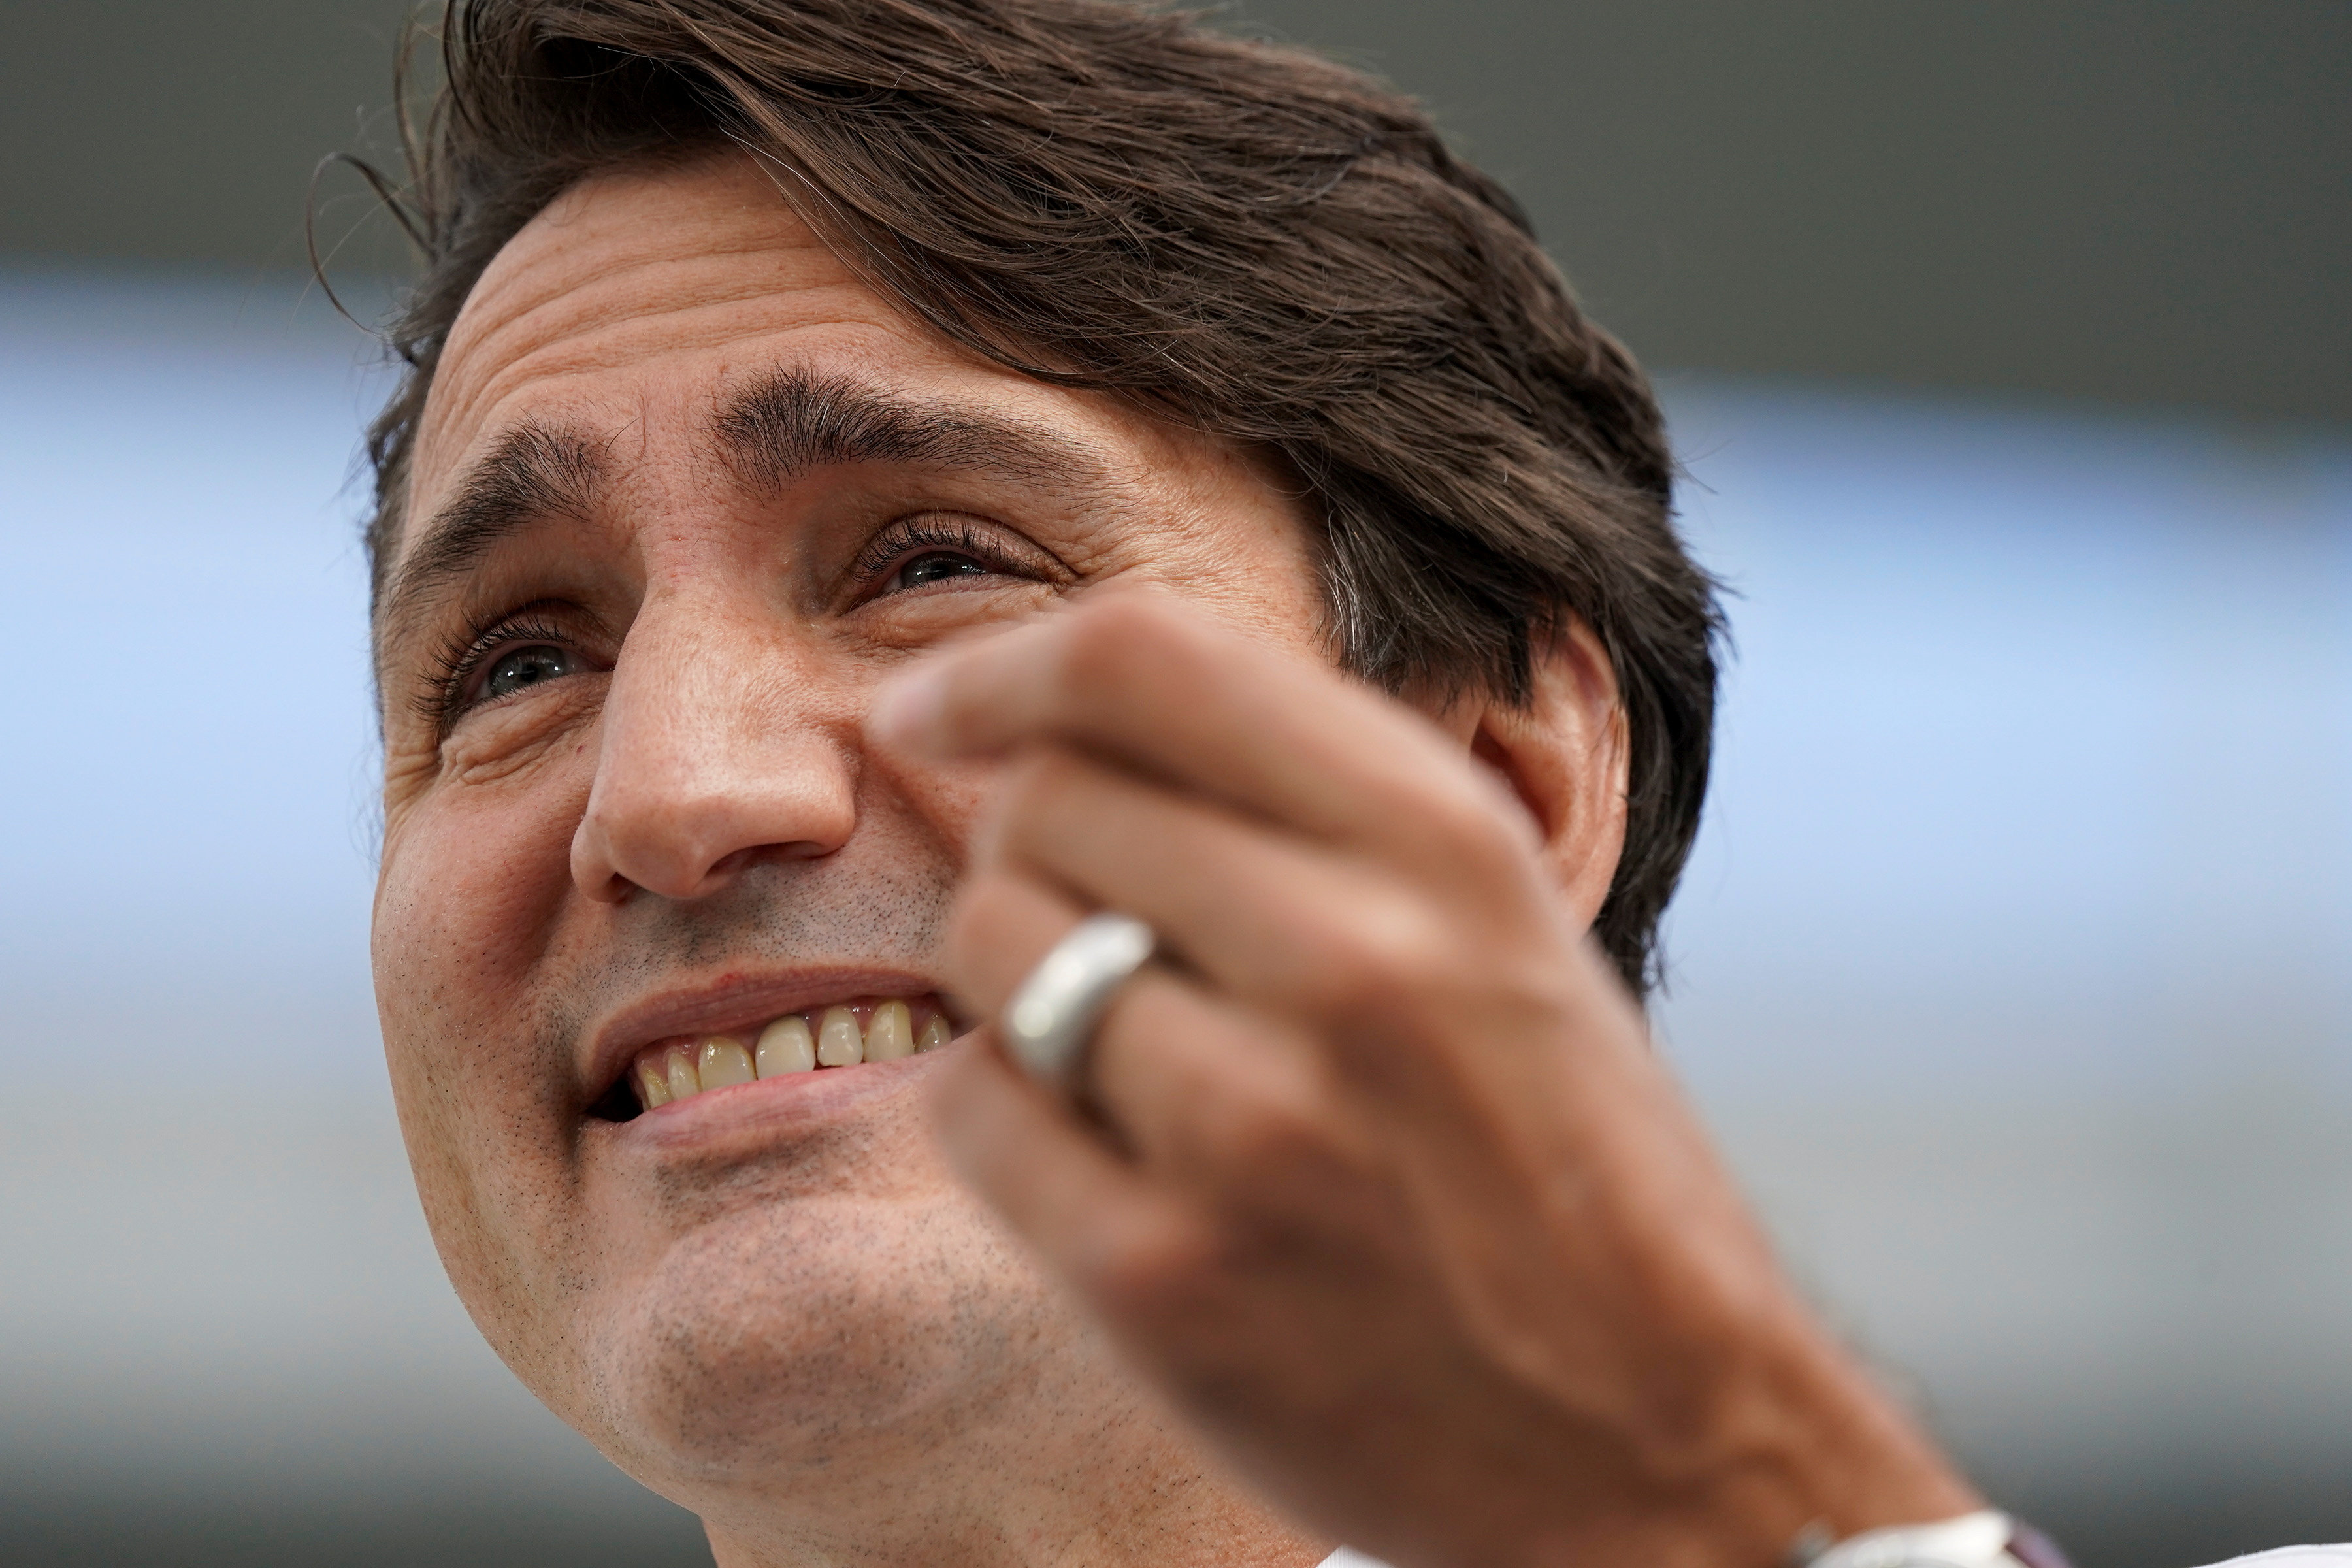 Canada's Liberal Prime Minister Justin Trudeau campaigns in Vancouver, British Columbia